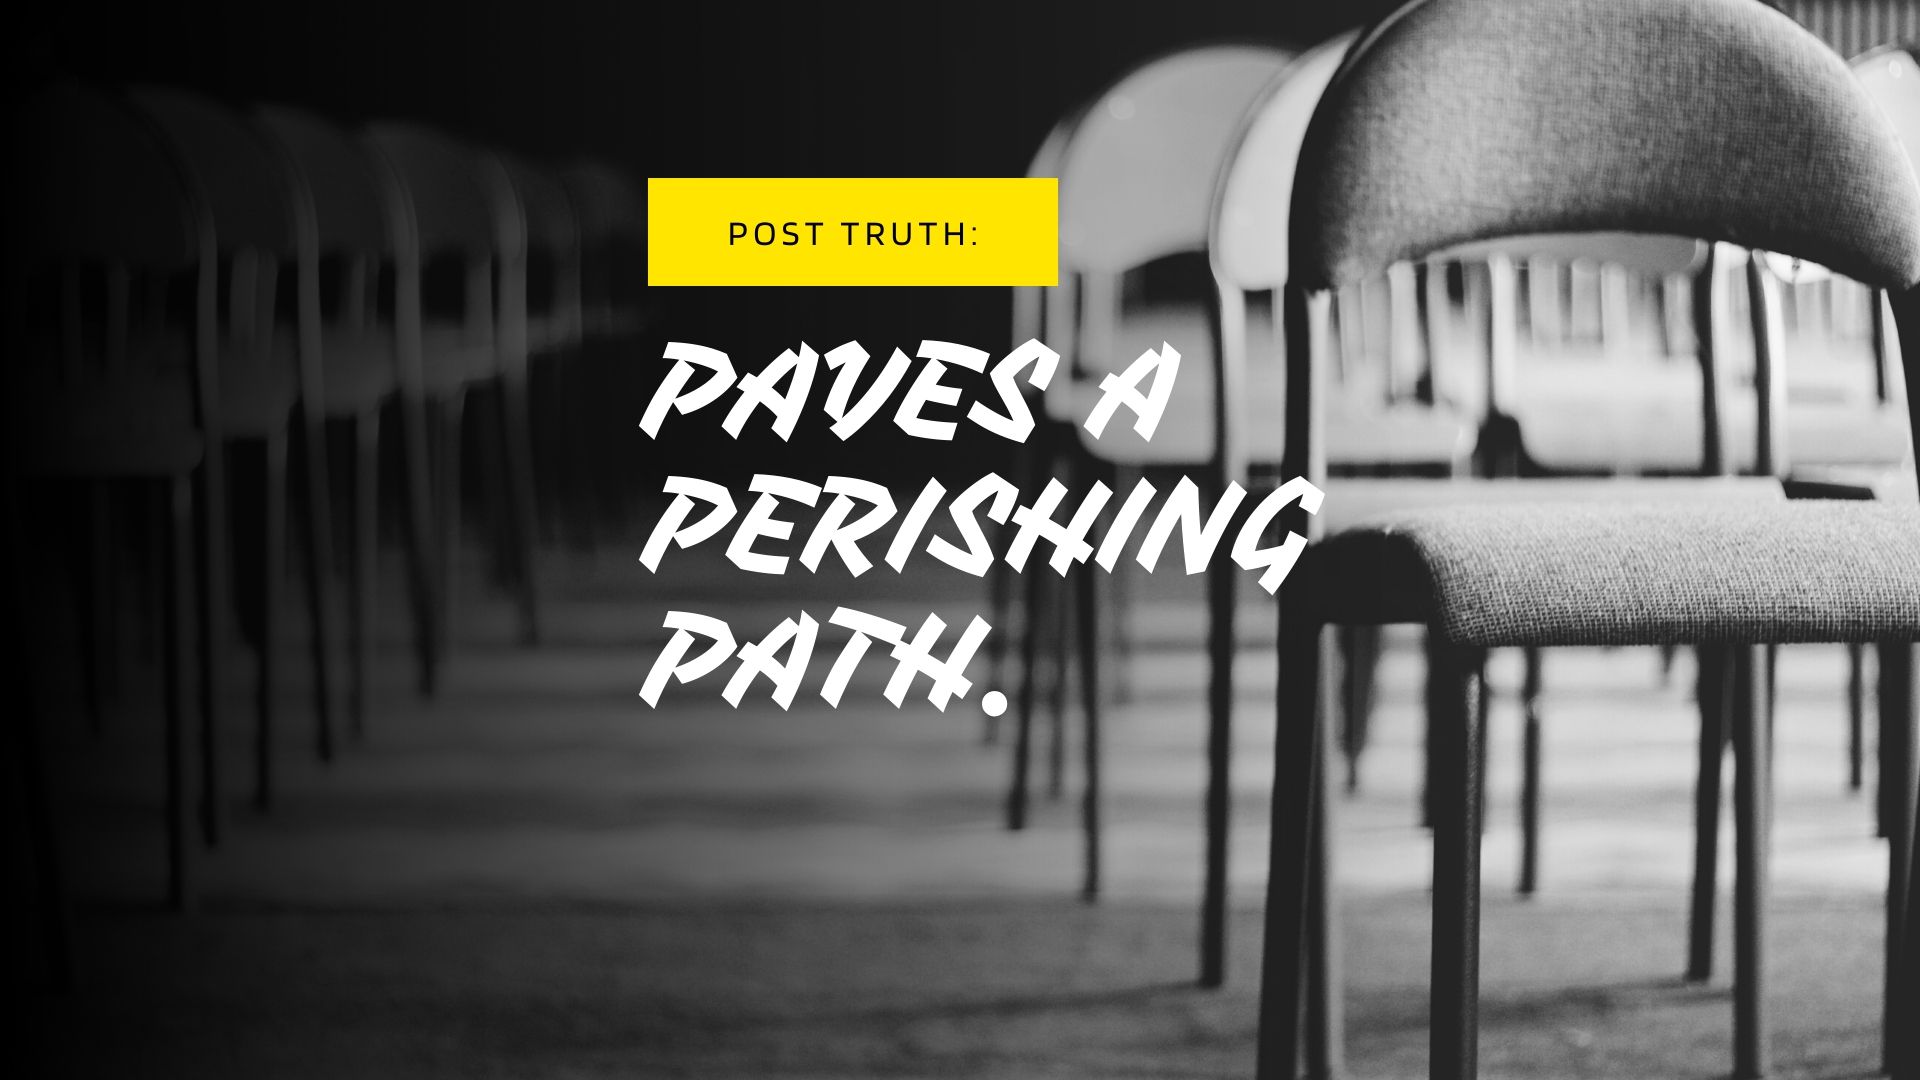 Post Truth: paves a perishing path.